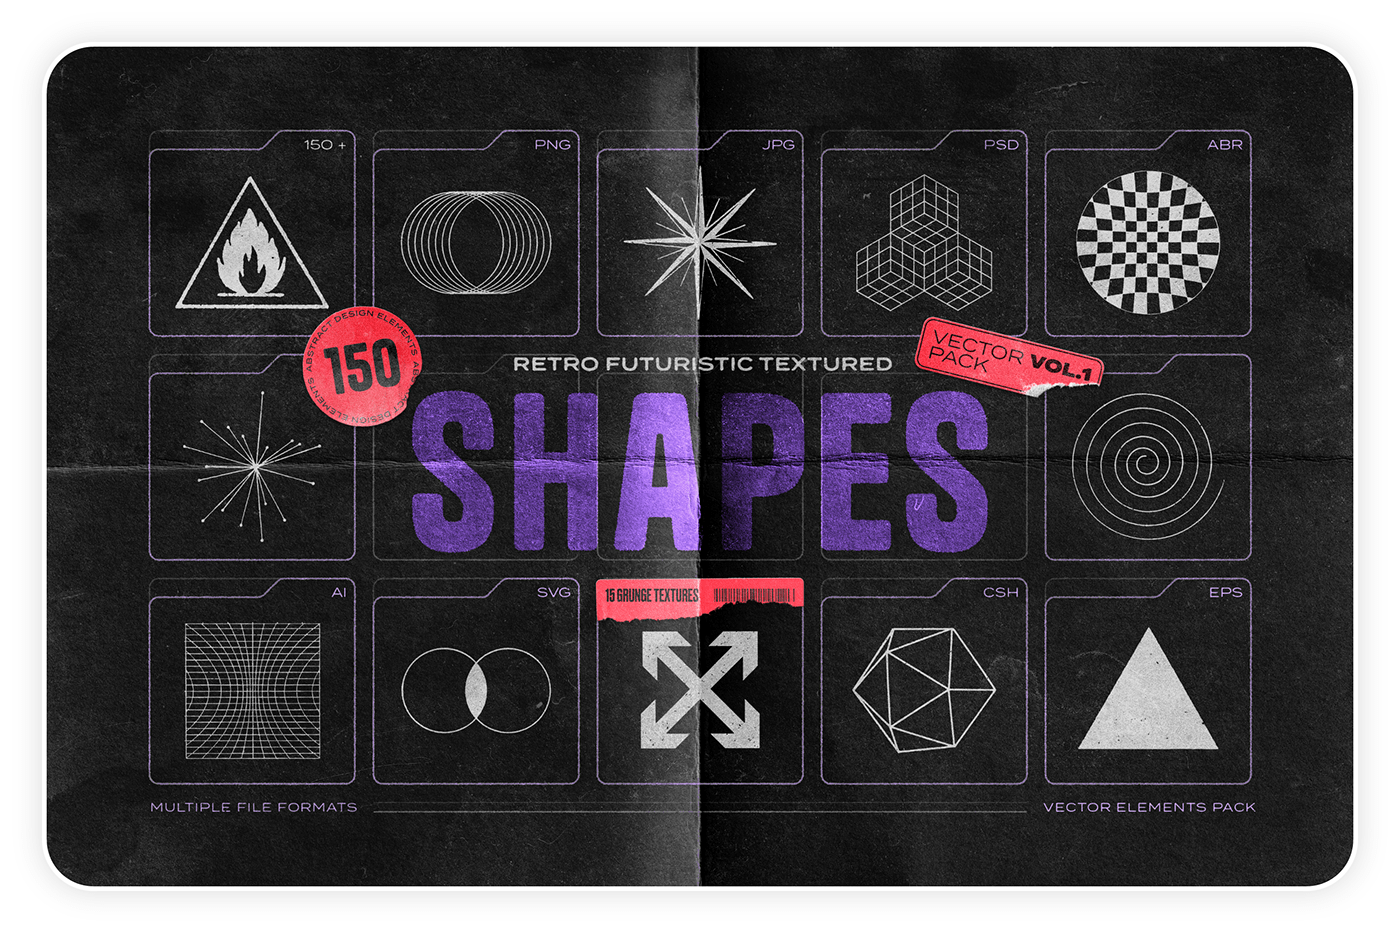 abstract album art disstressed download geometric poster Retro retro-futuristic shape vector